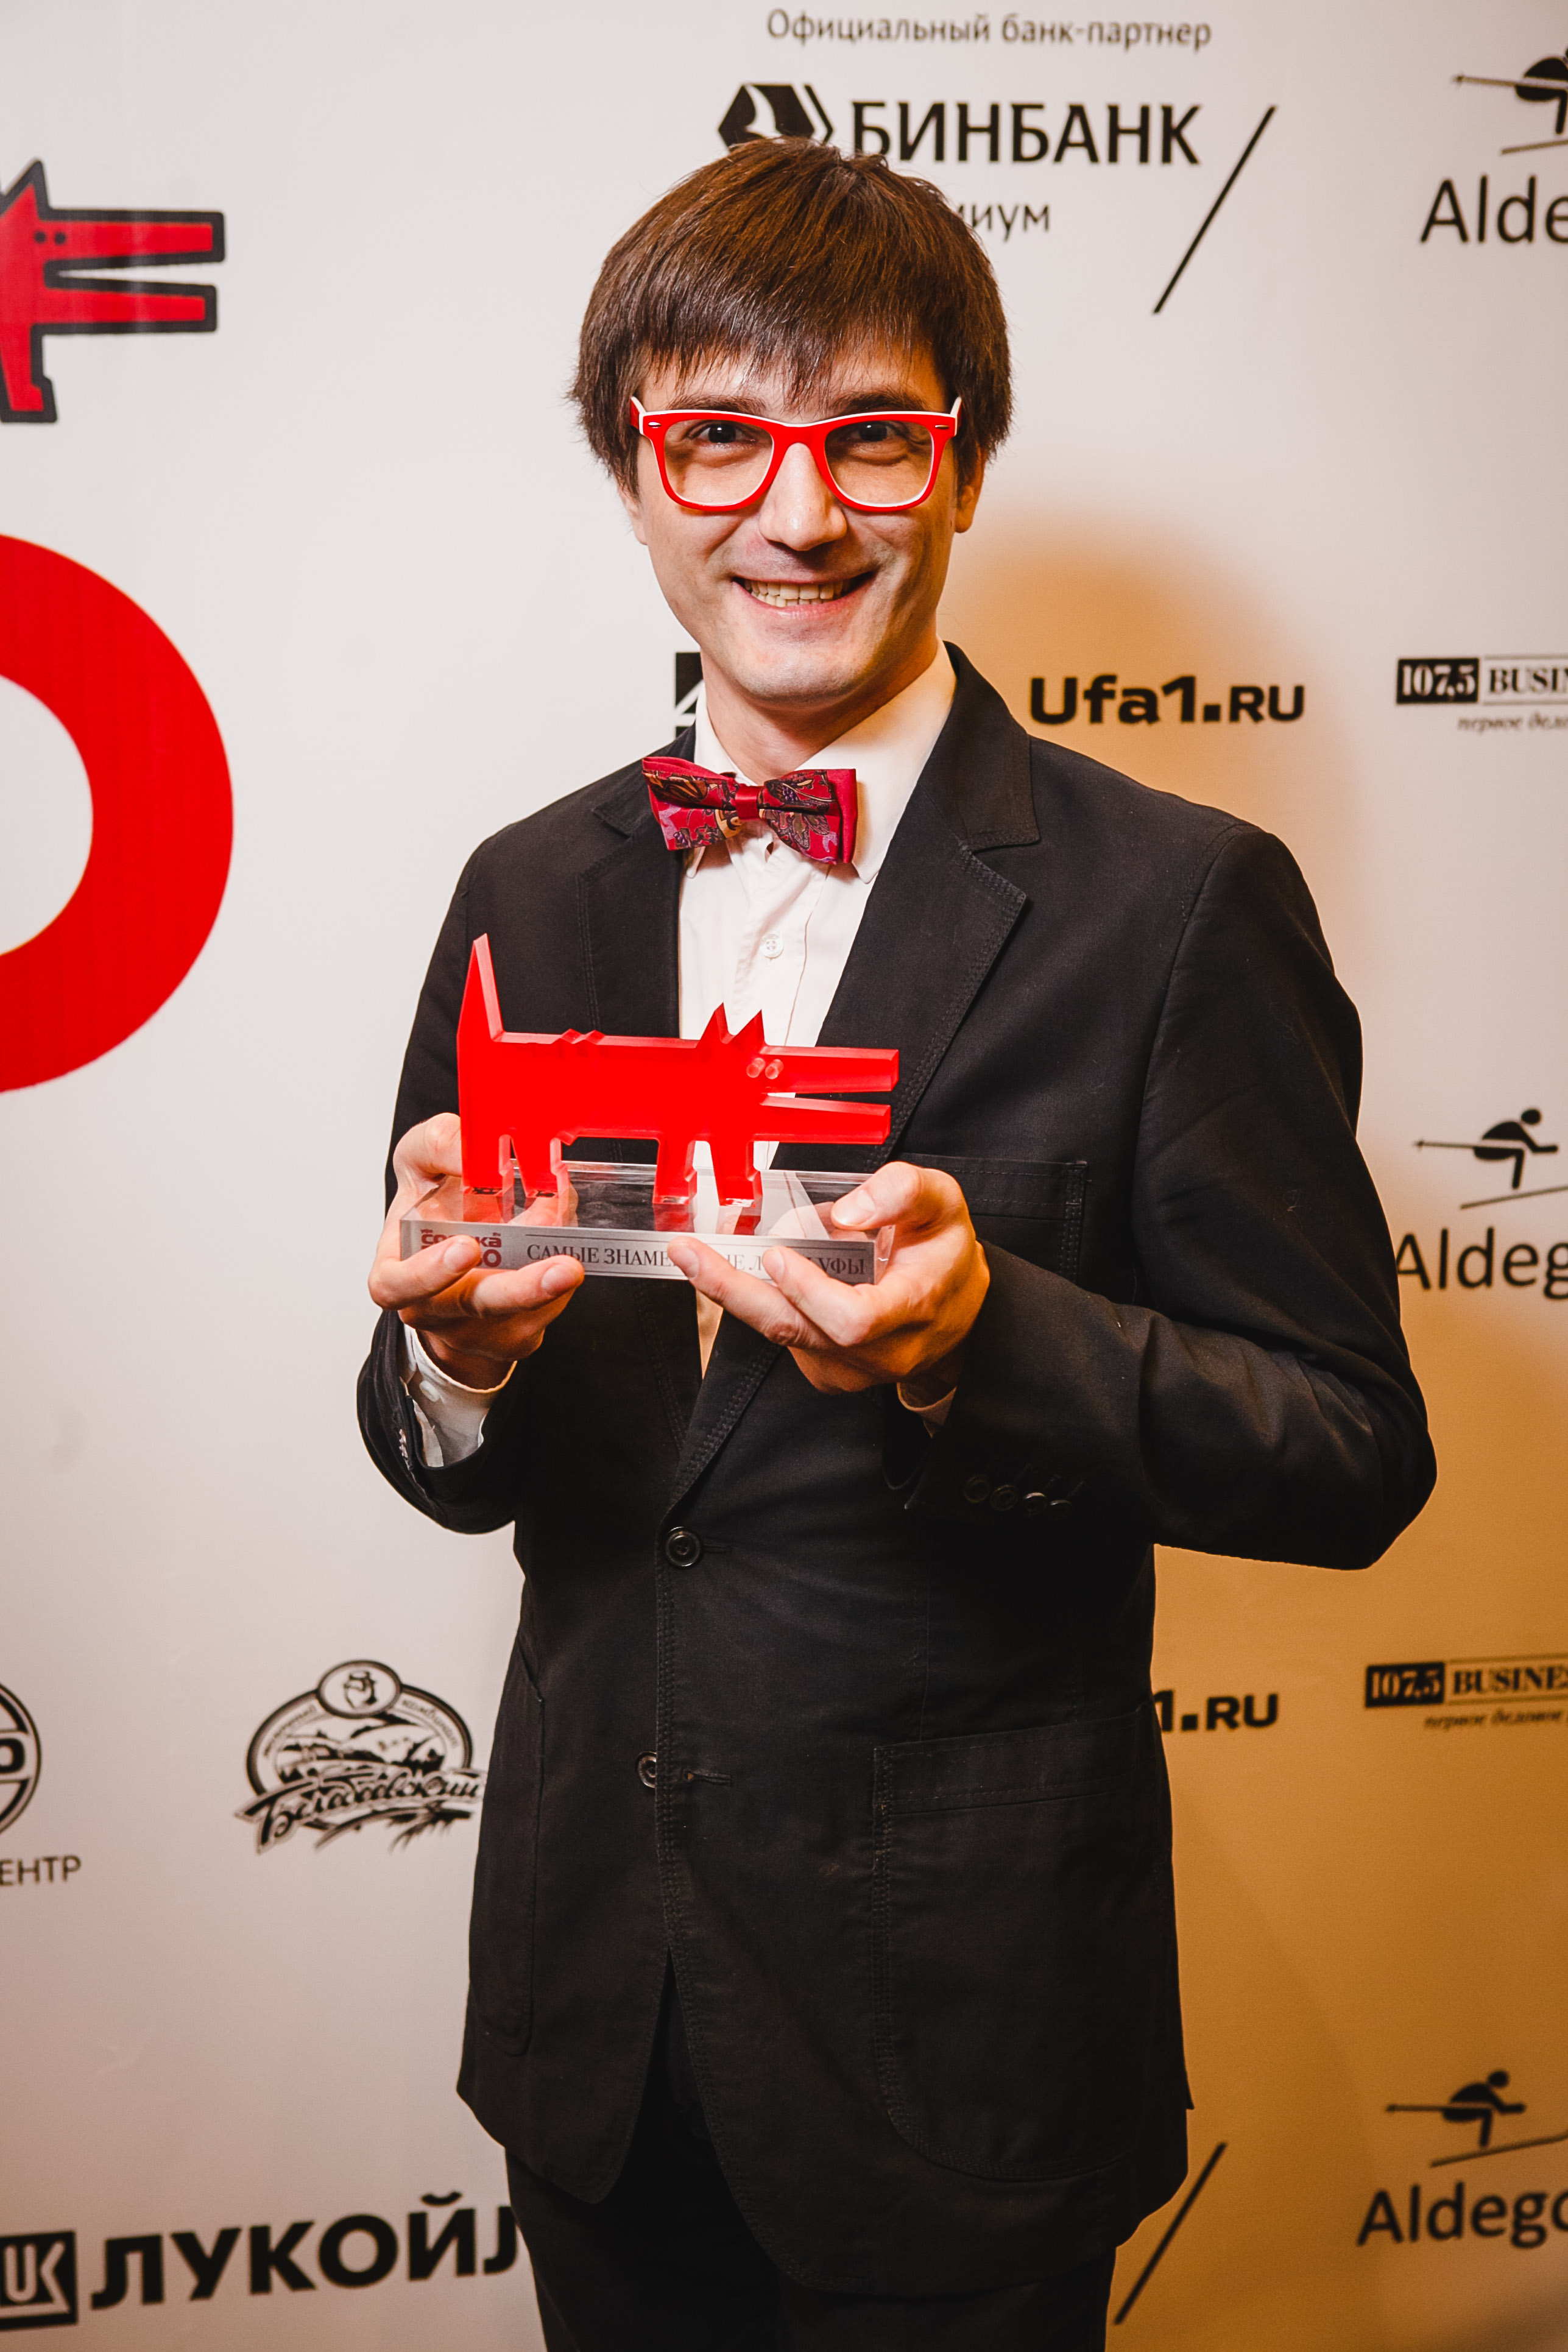 Победителем номинации &laquo;Искусство&raquo; стал пианист Марат Губайдуллин.
